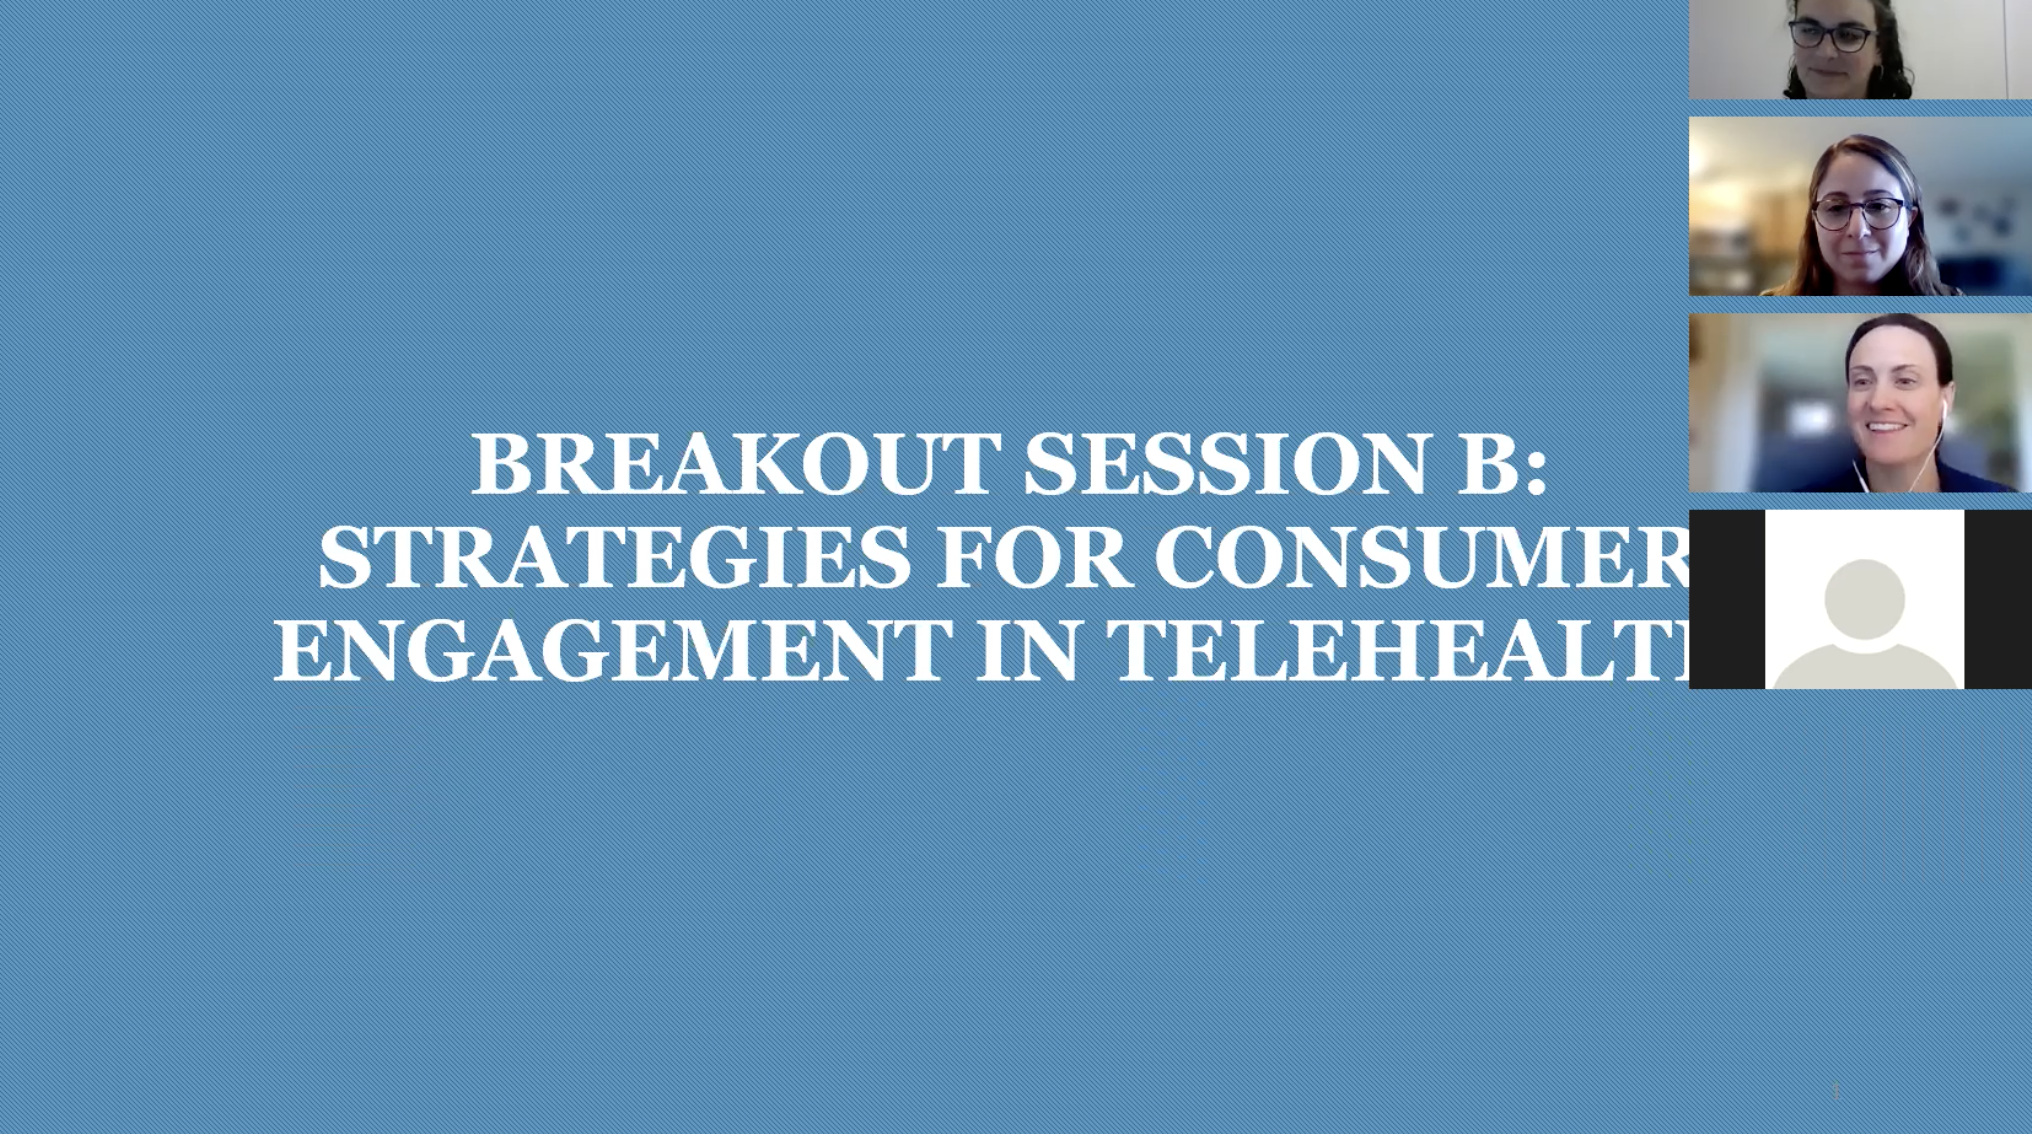 Strategies for Consumer Engagement in Telehealth